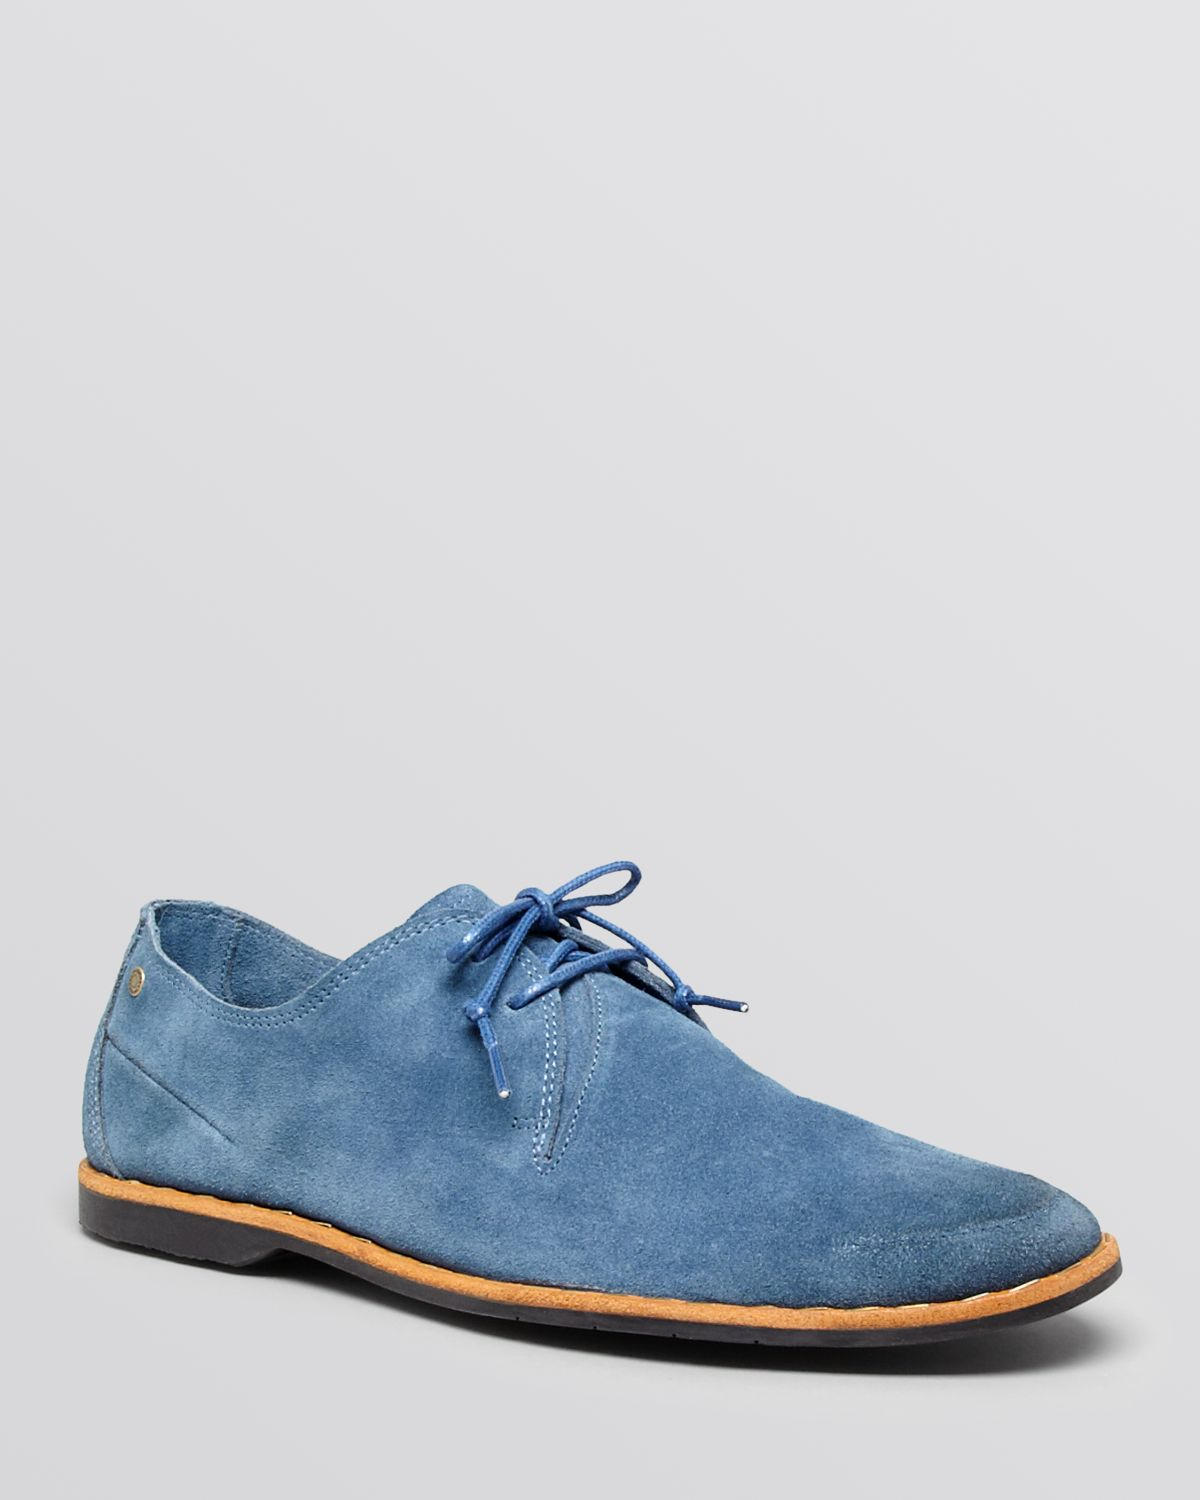 Diesel Unlaw Lawles Suede Shoes in Blue for Men (Blue Teal) | Lyst